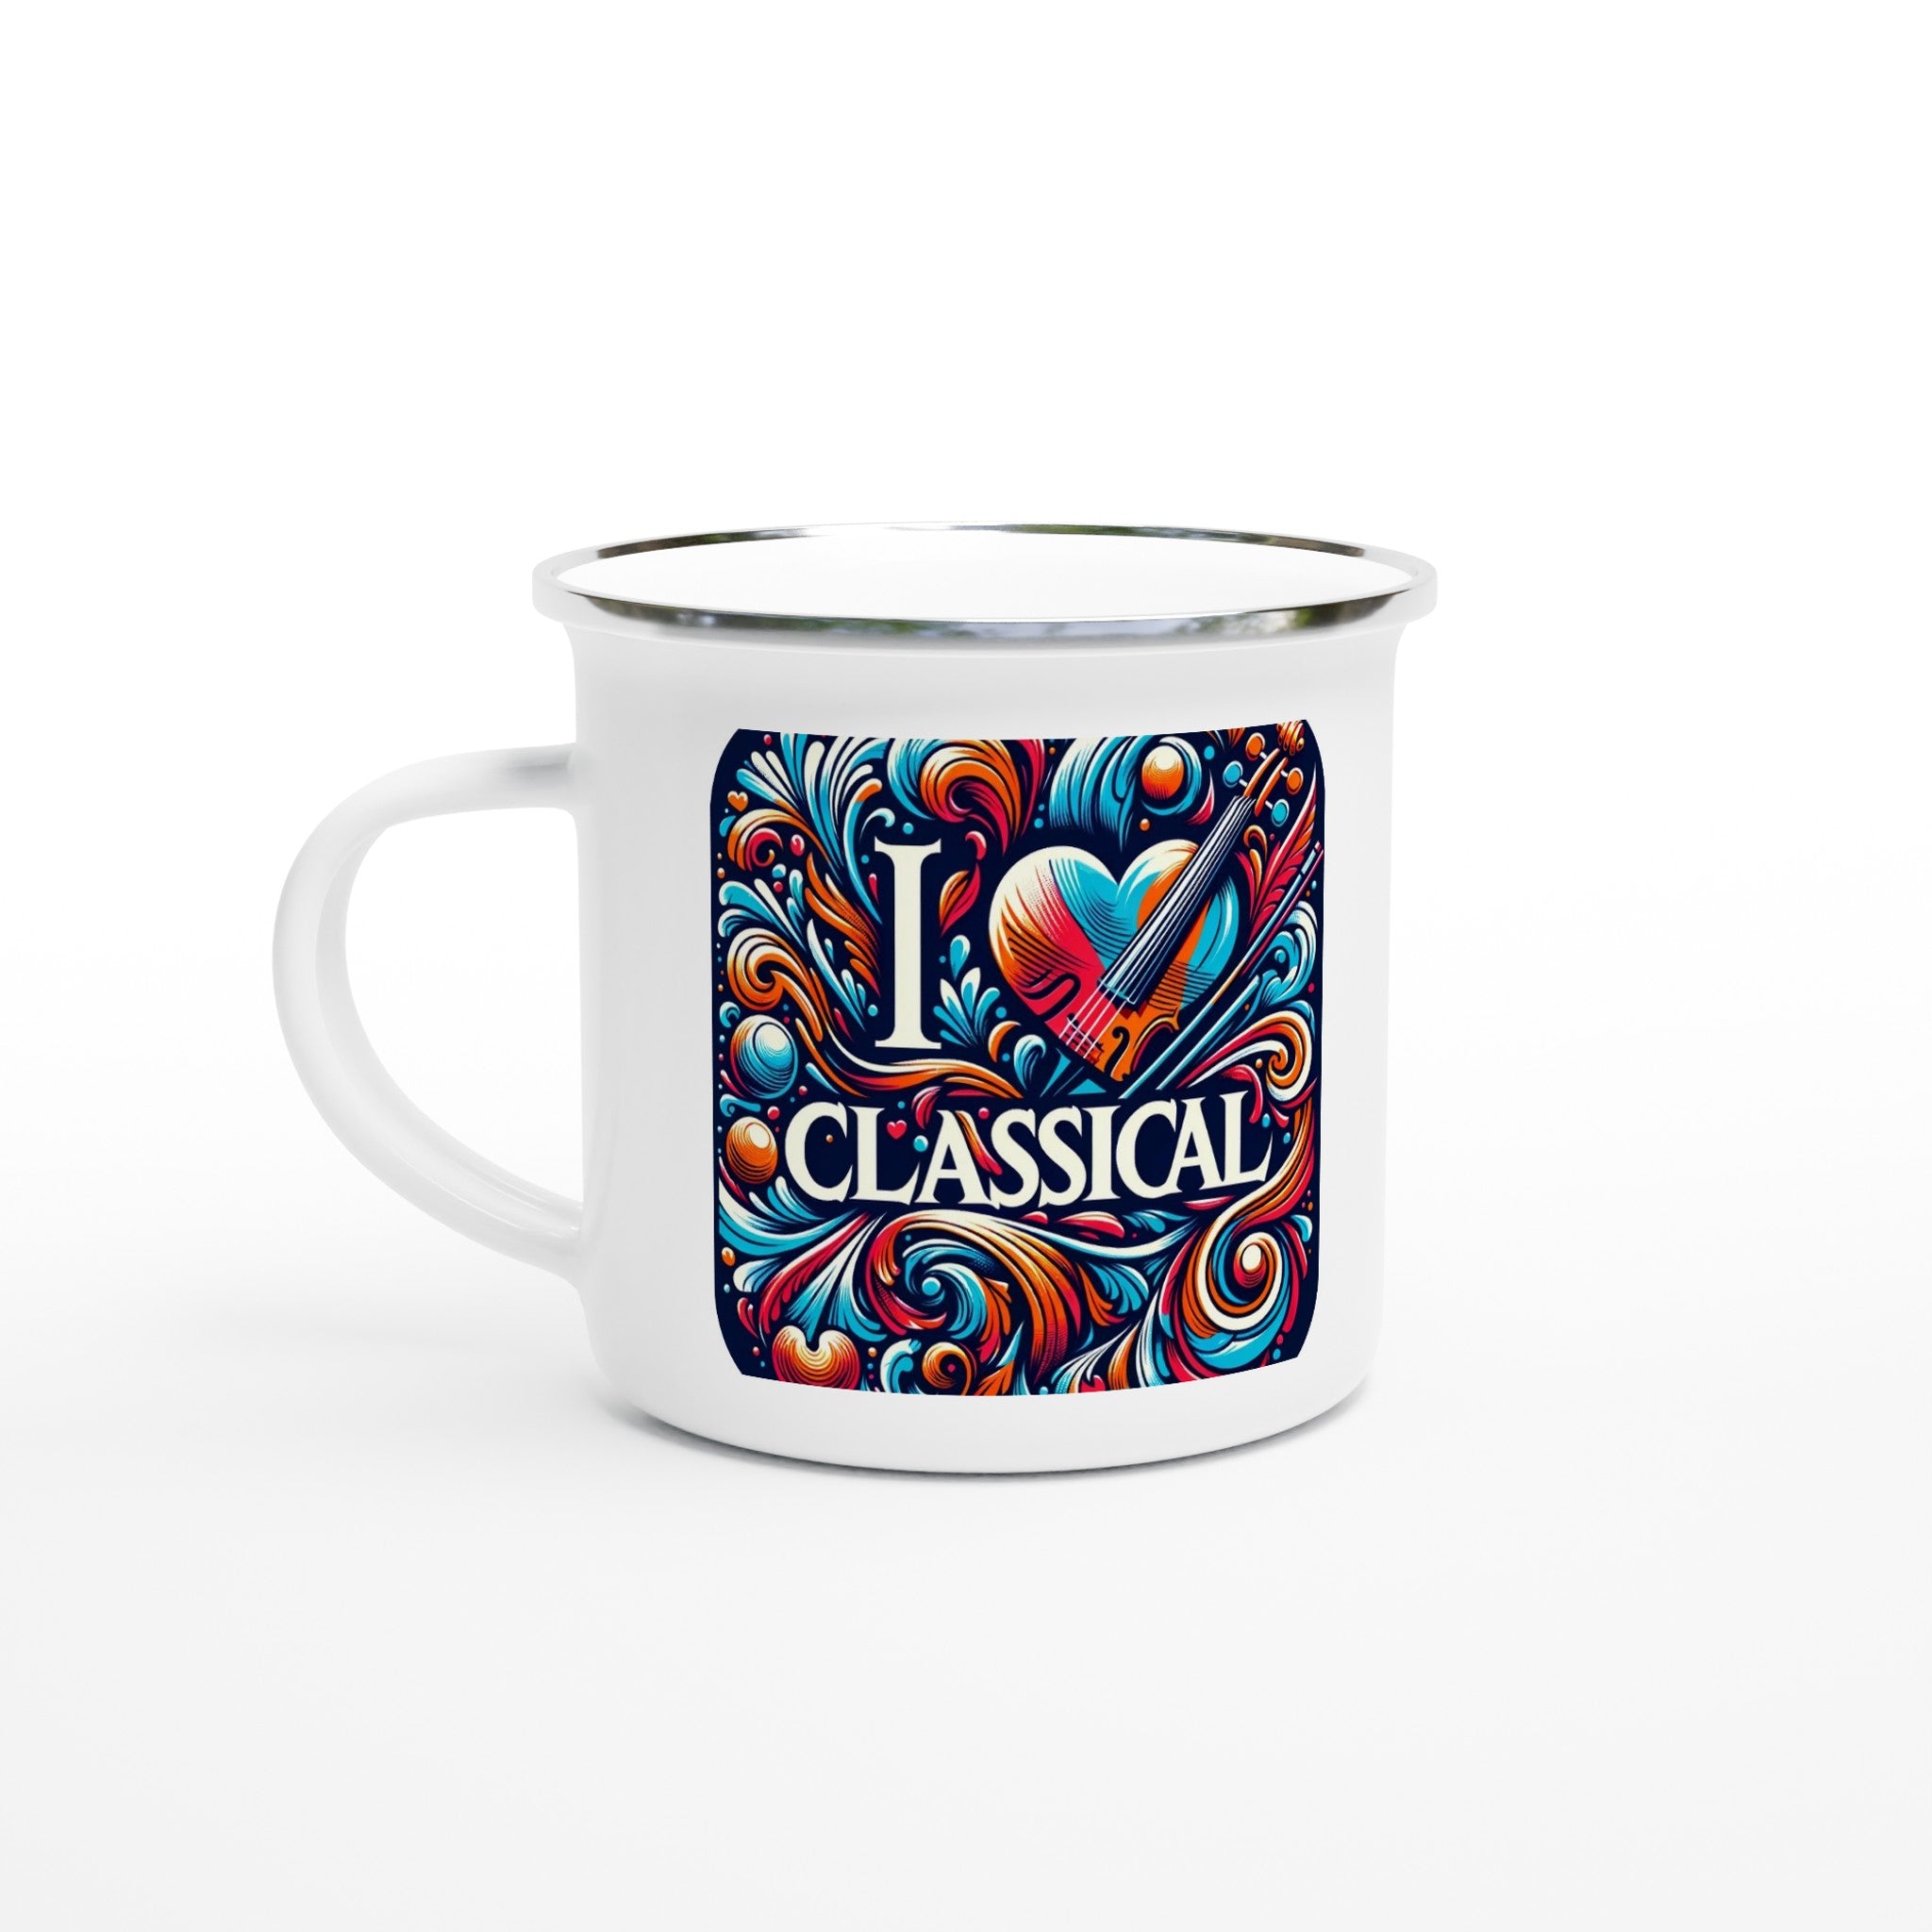 "I LOVE CLASSICAL" White 12oz Enamel Mug